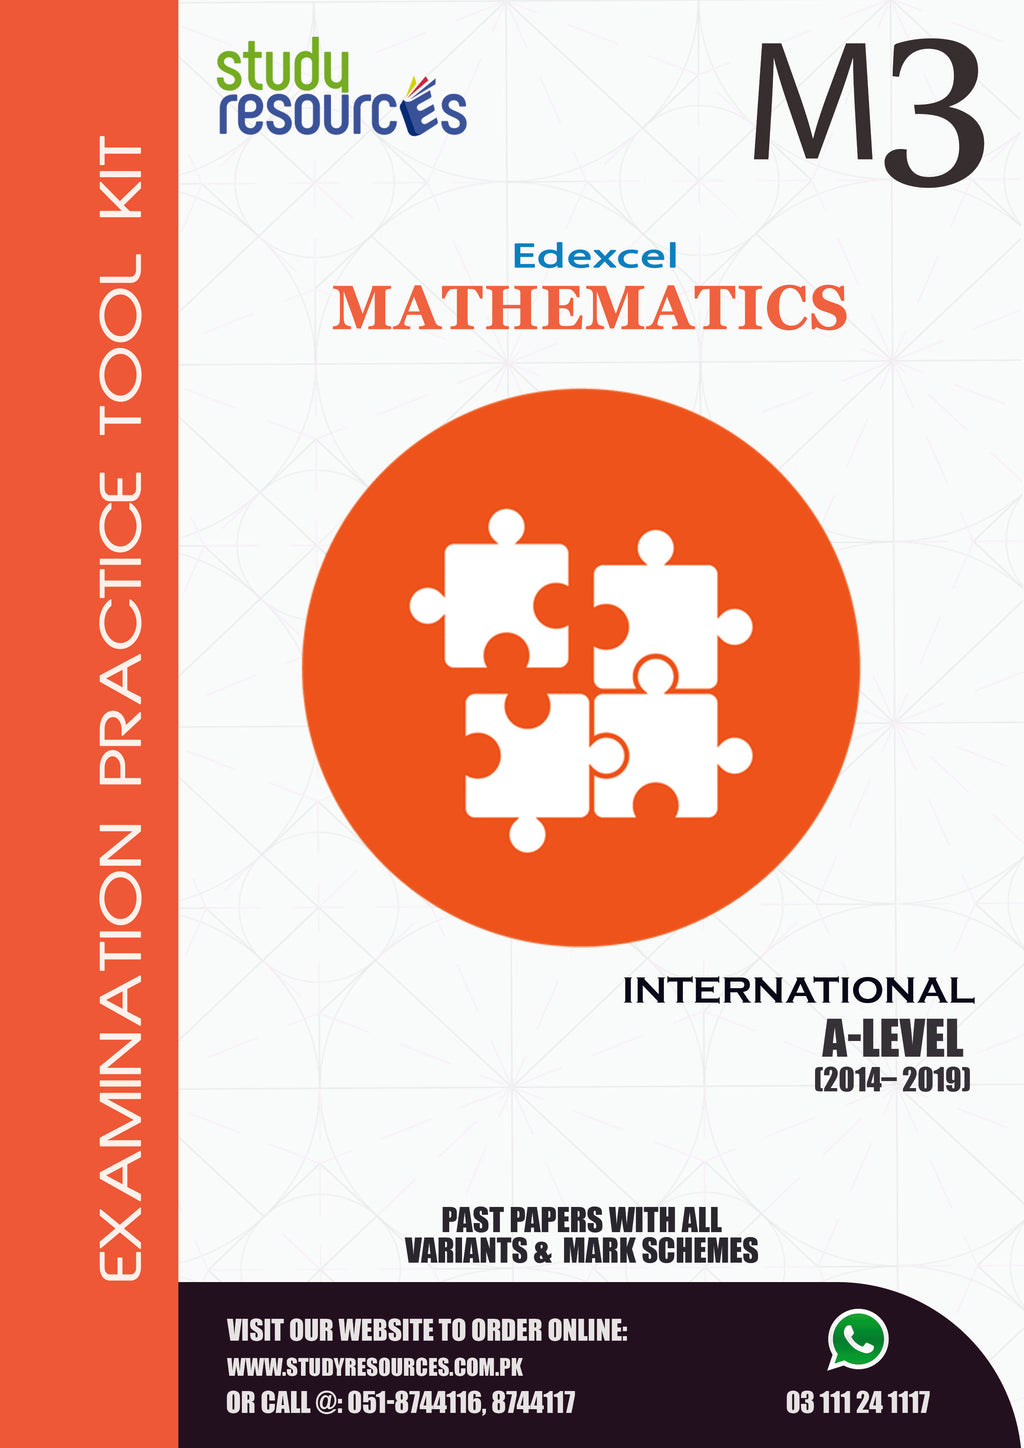 Edexcel A-Level Mathematics M-3 Past Papers (2014-2019)